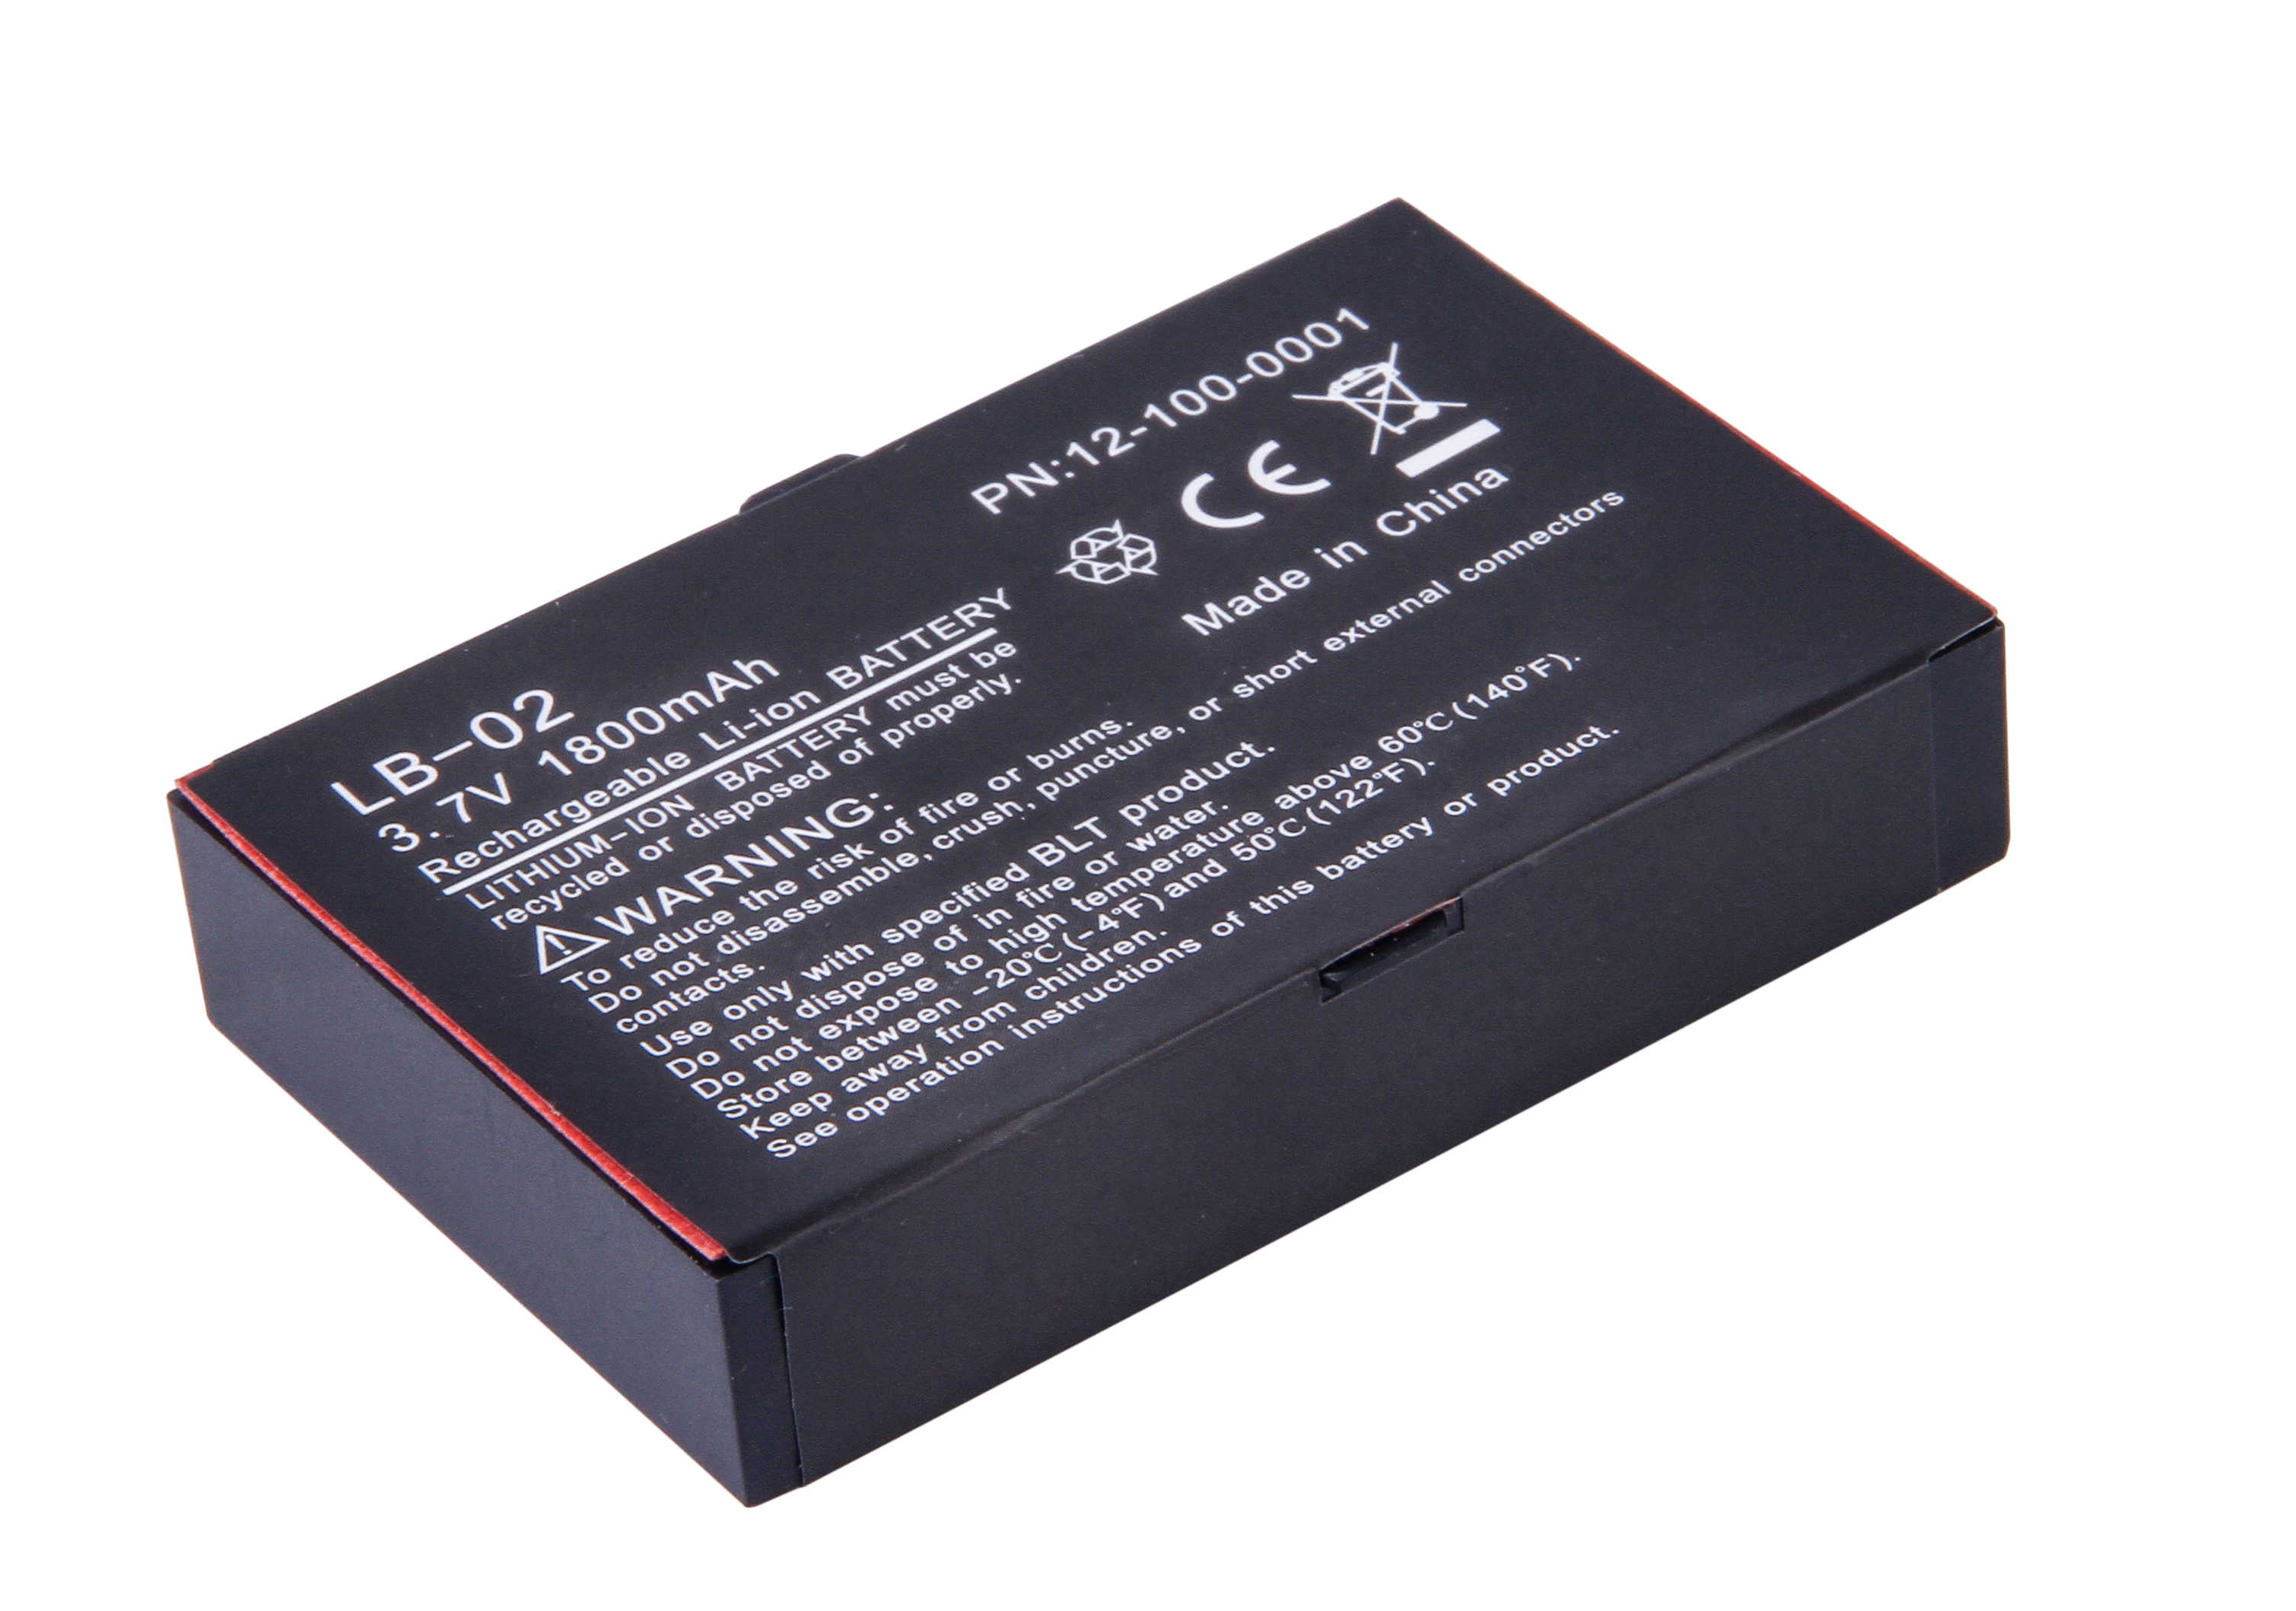 Аккумуляторная батарея для Dixion Storm EMS7, LB-02 PN: 12-100-0001, 3.7V 1800 mAh